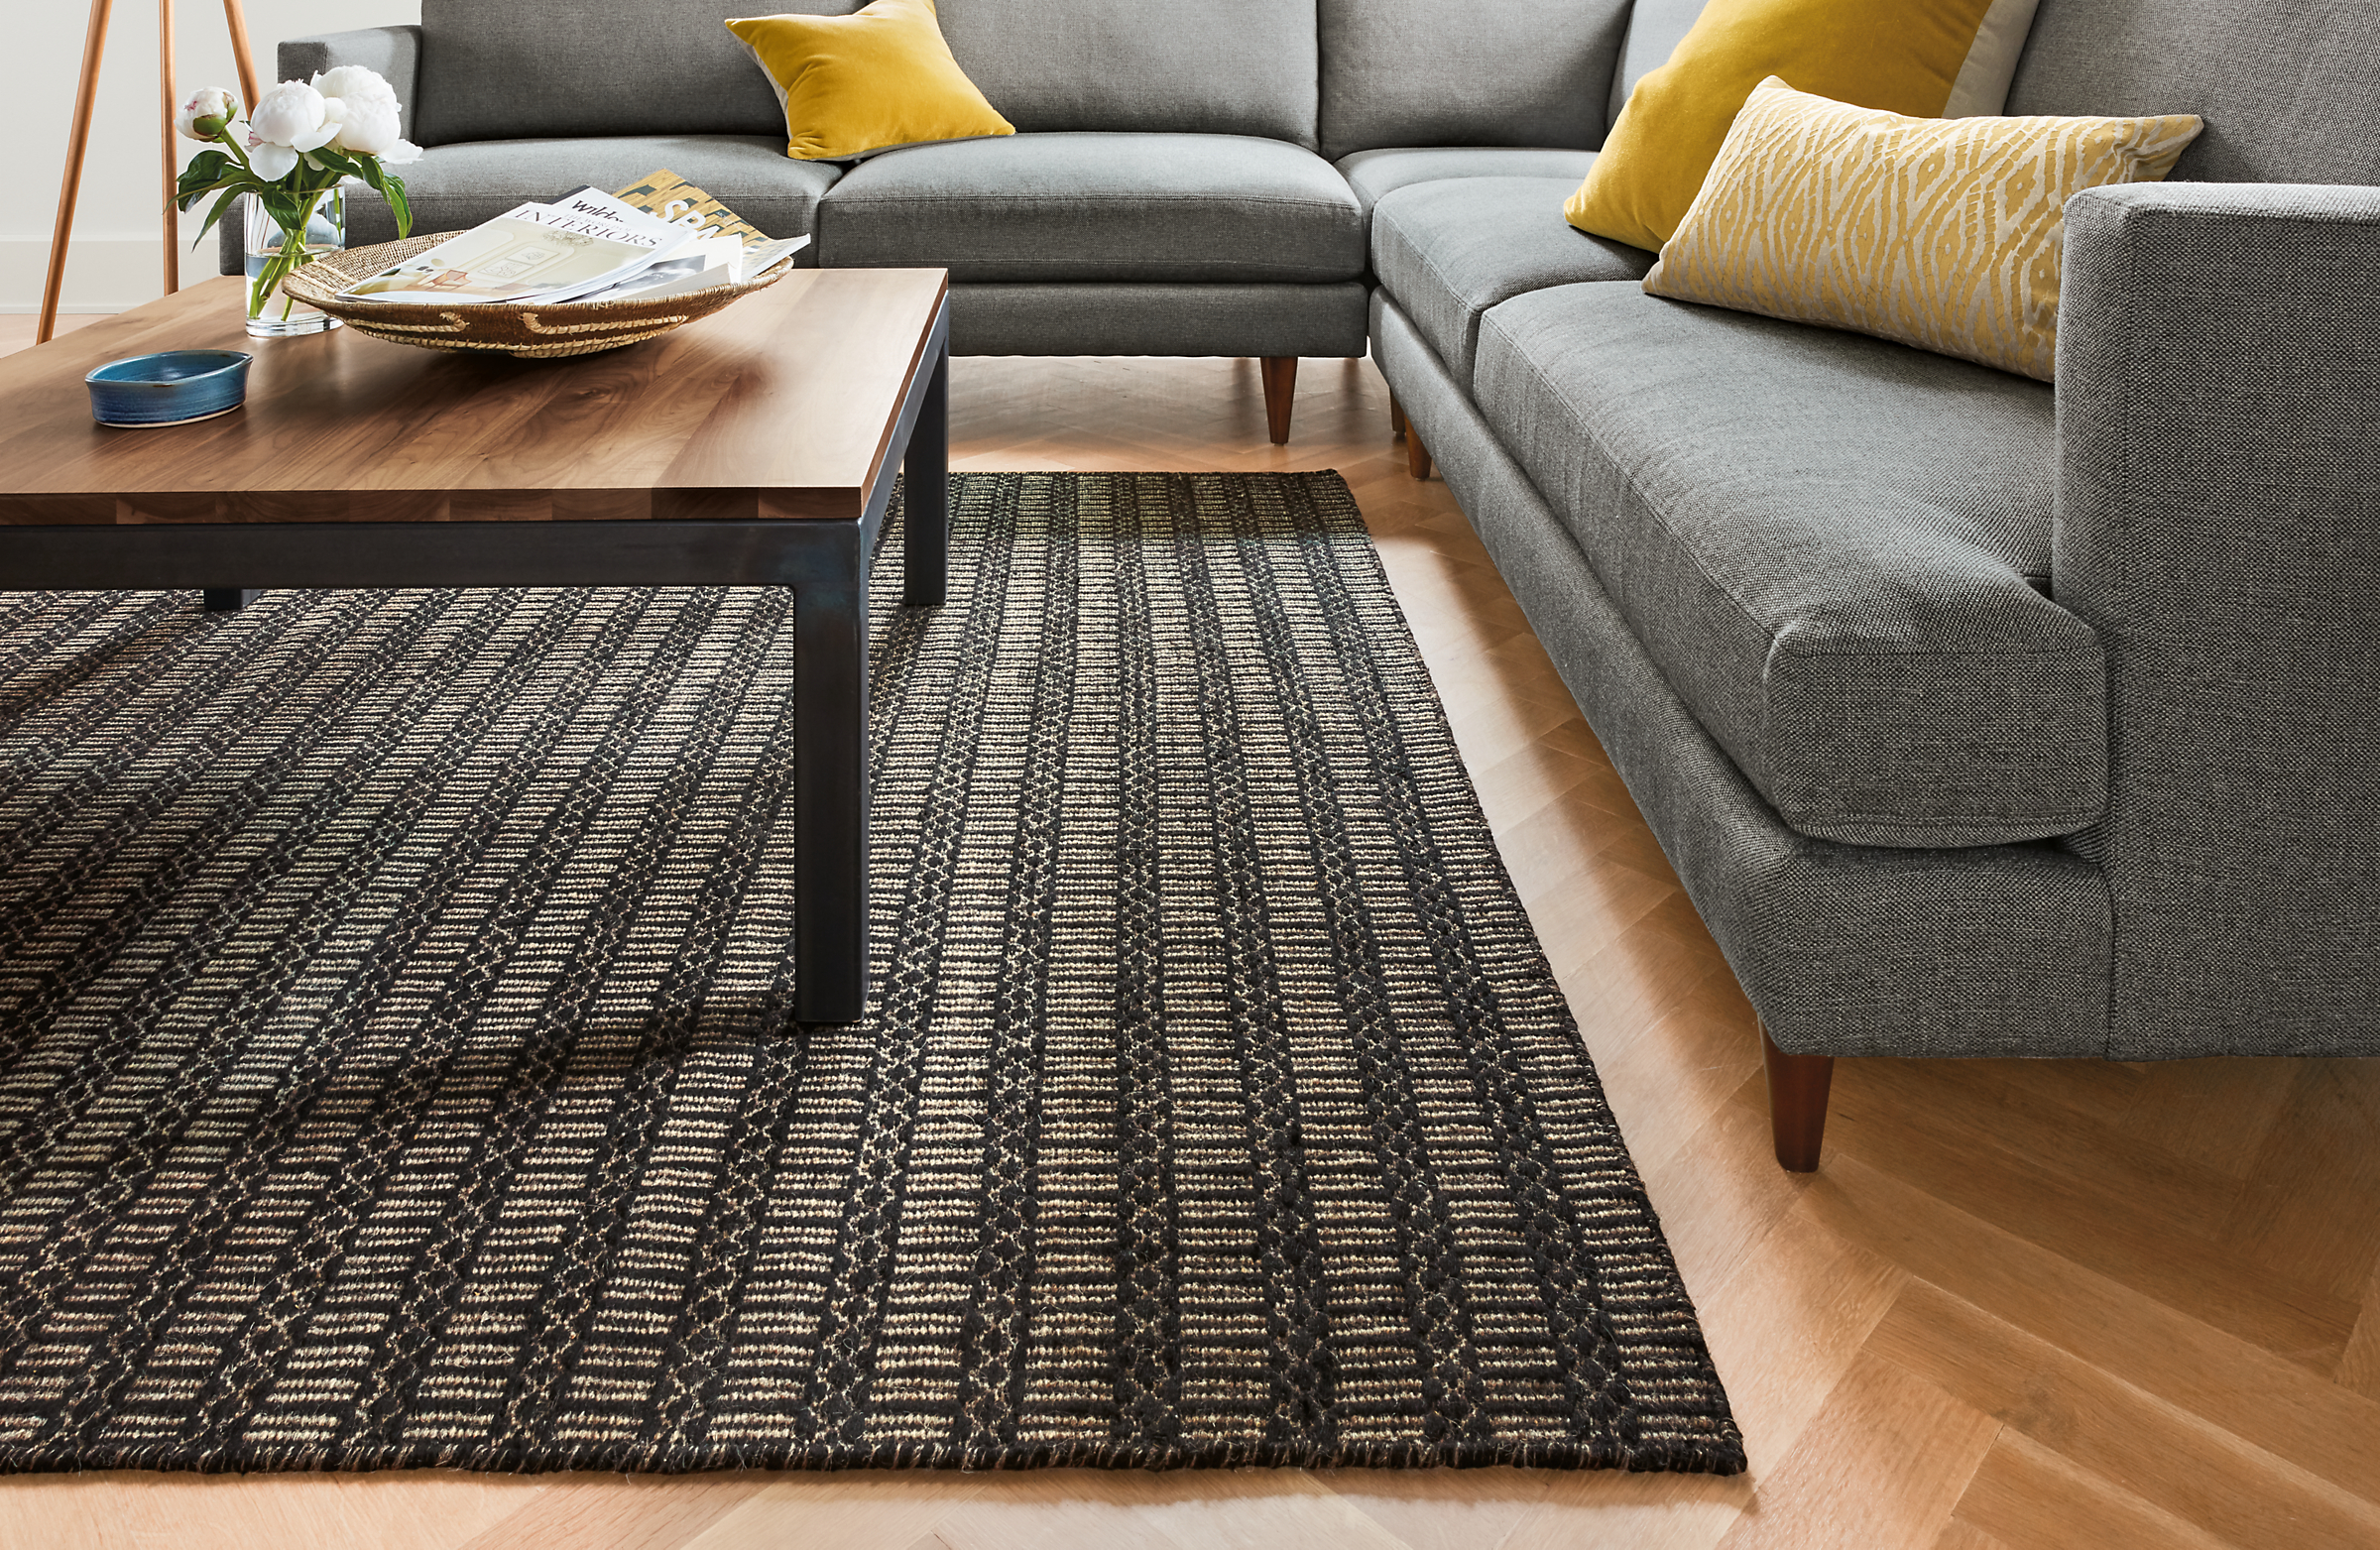 Detail of Array rug in living room.